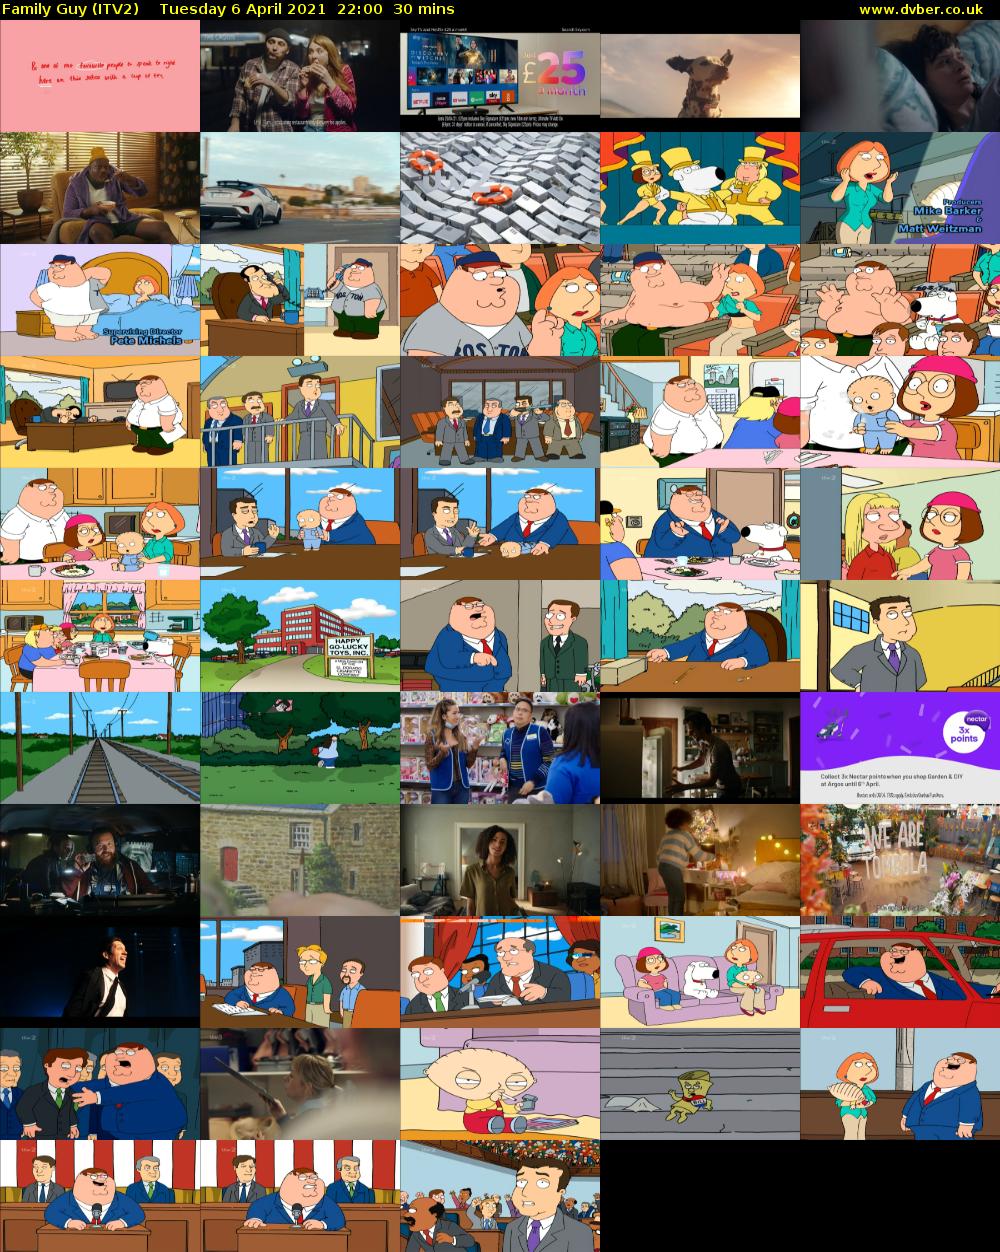 Family Guy (ITV2) Tuesday 6 April 2021 22:00 - 22:30